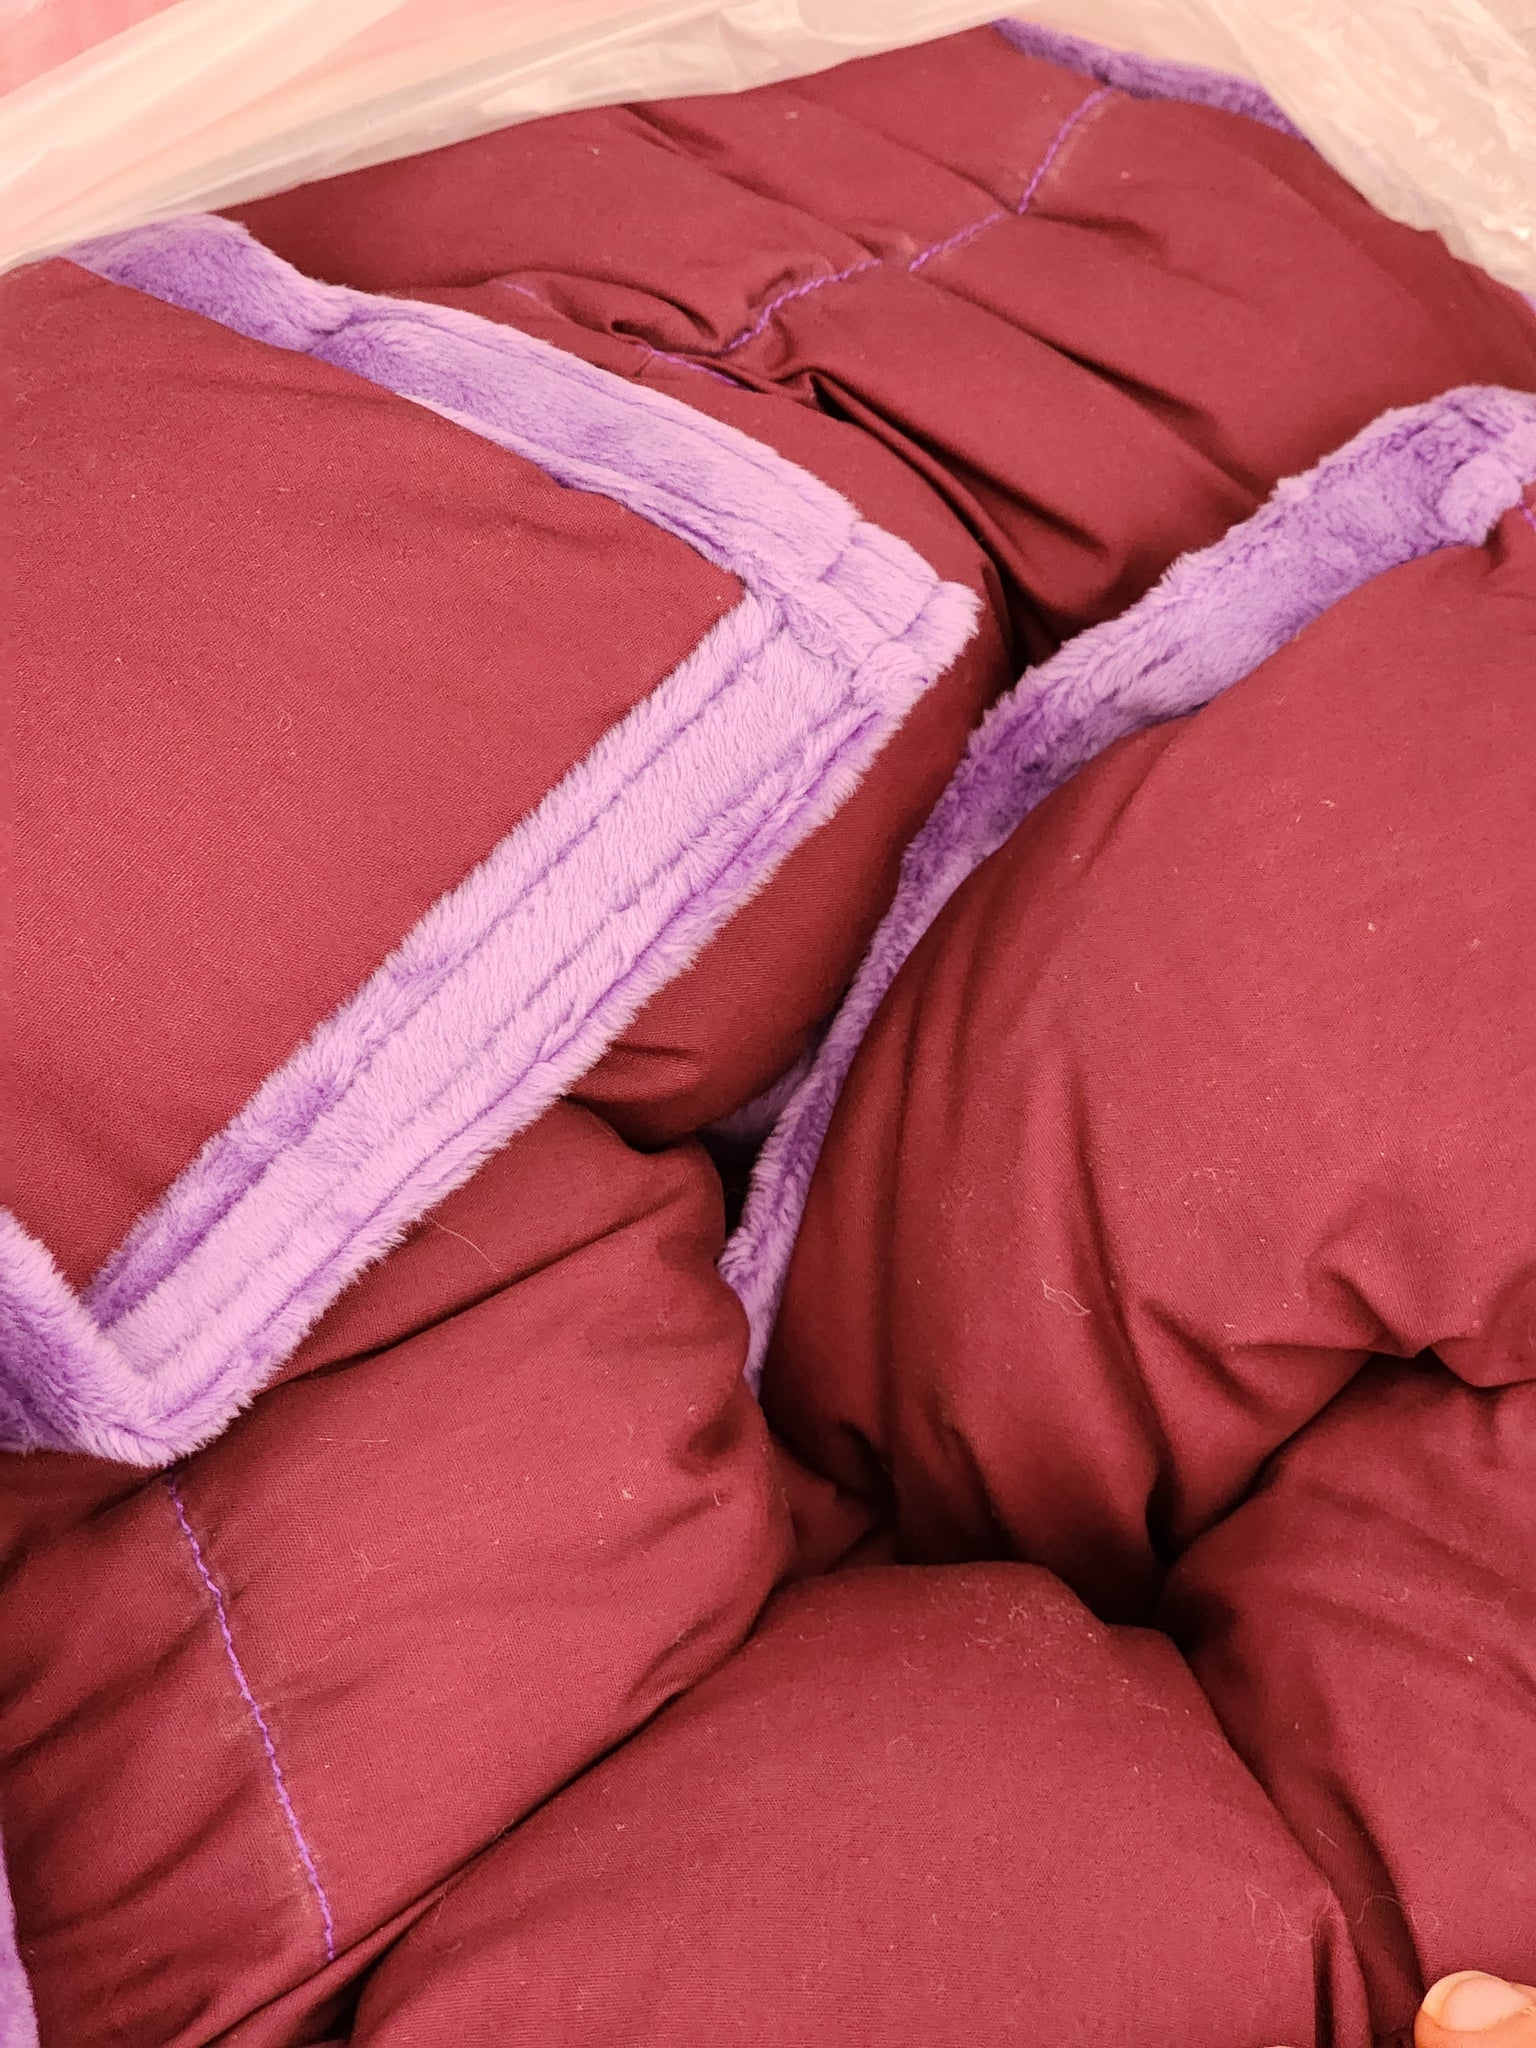 Clearance Weighted Blanket - Large 16 lb Cabernet/Violet Cuddle (for 150 lb user)